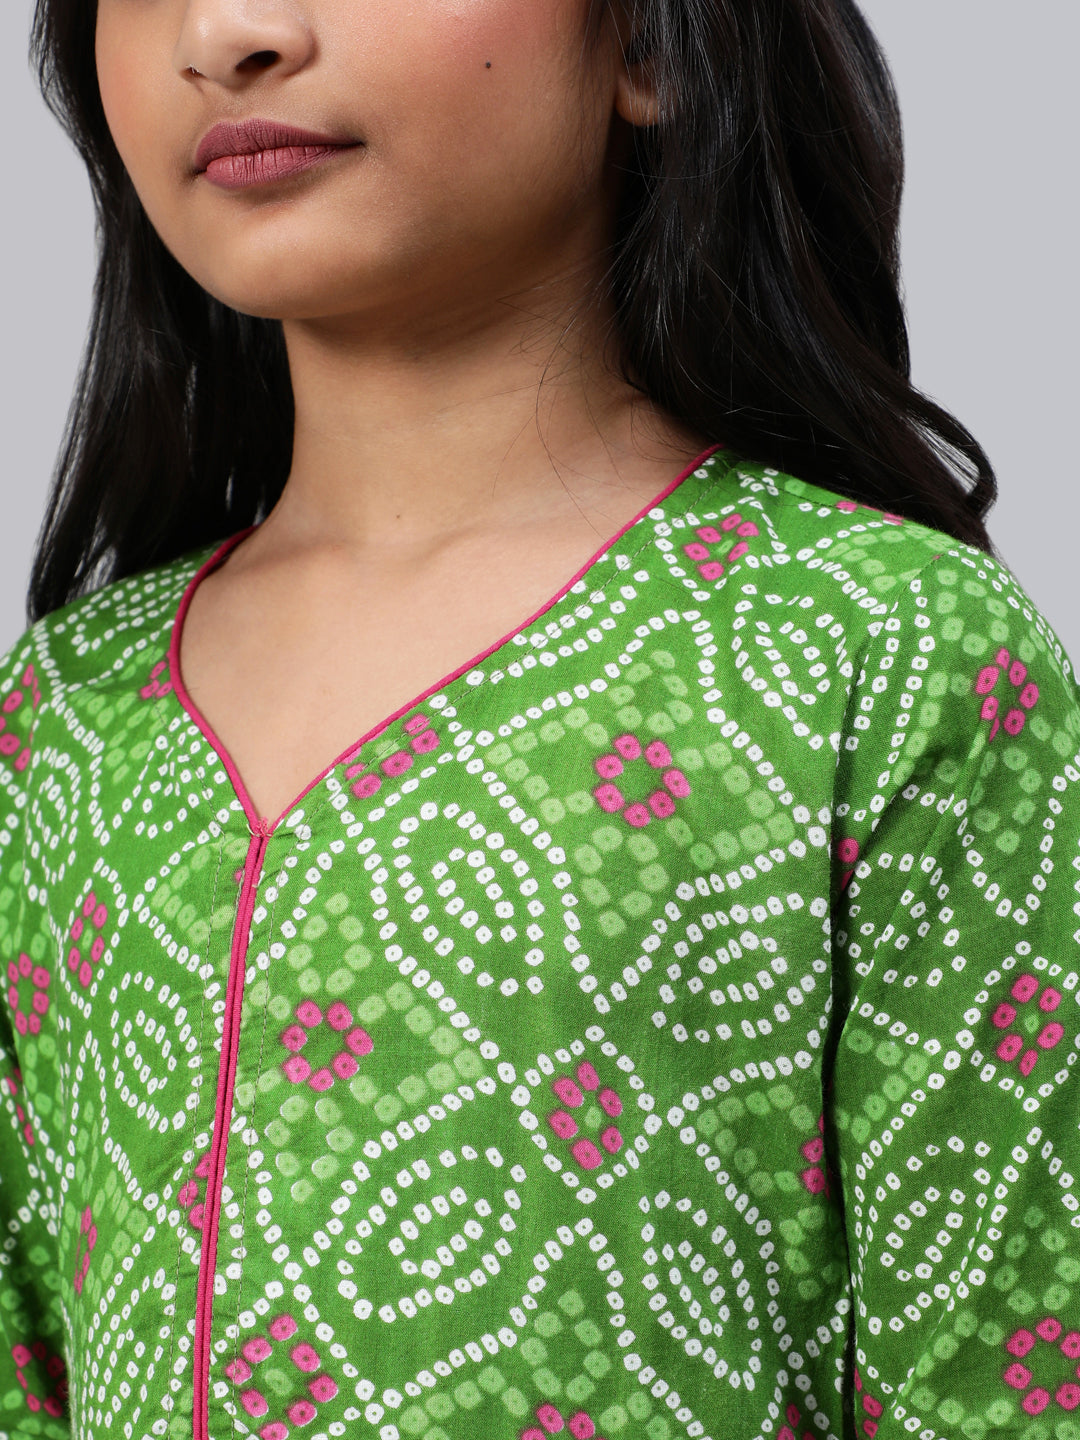 Green Bandhani Print Flared Dress With Dupatta